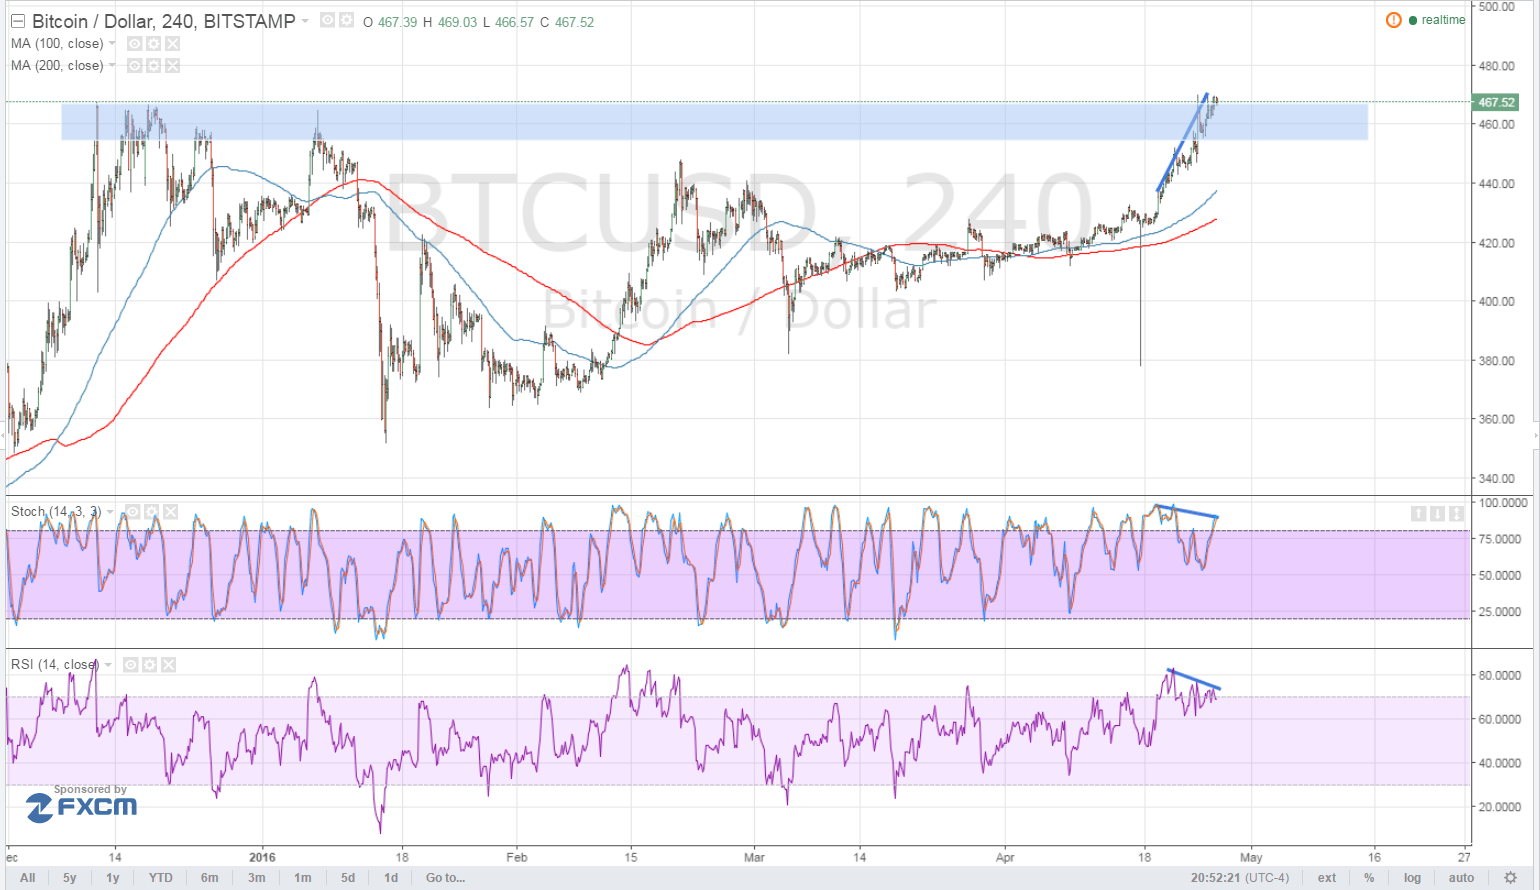 Bitcoin Price Technical Analysis for 04/27/2016 - Bearish Divergence Alert!